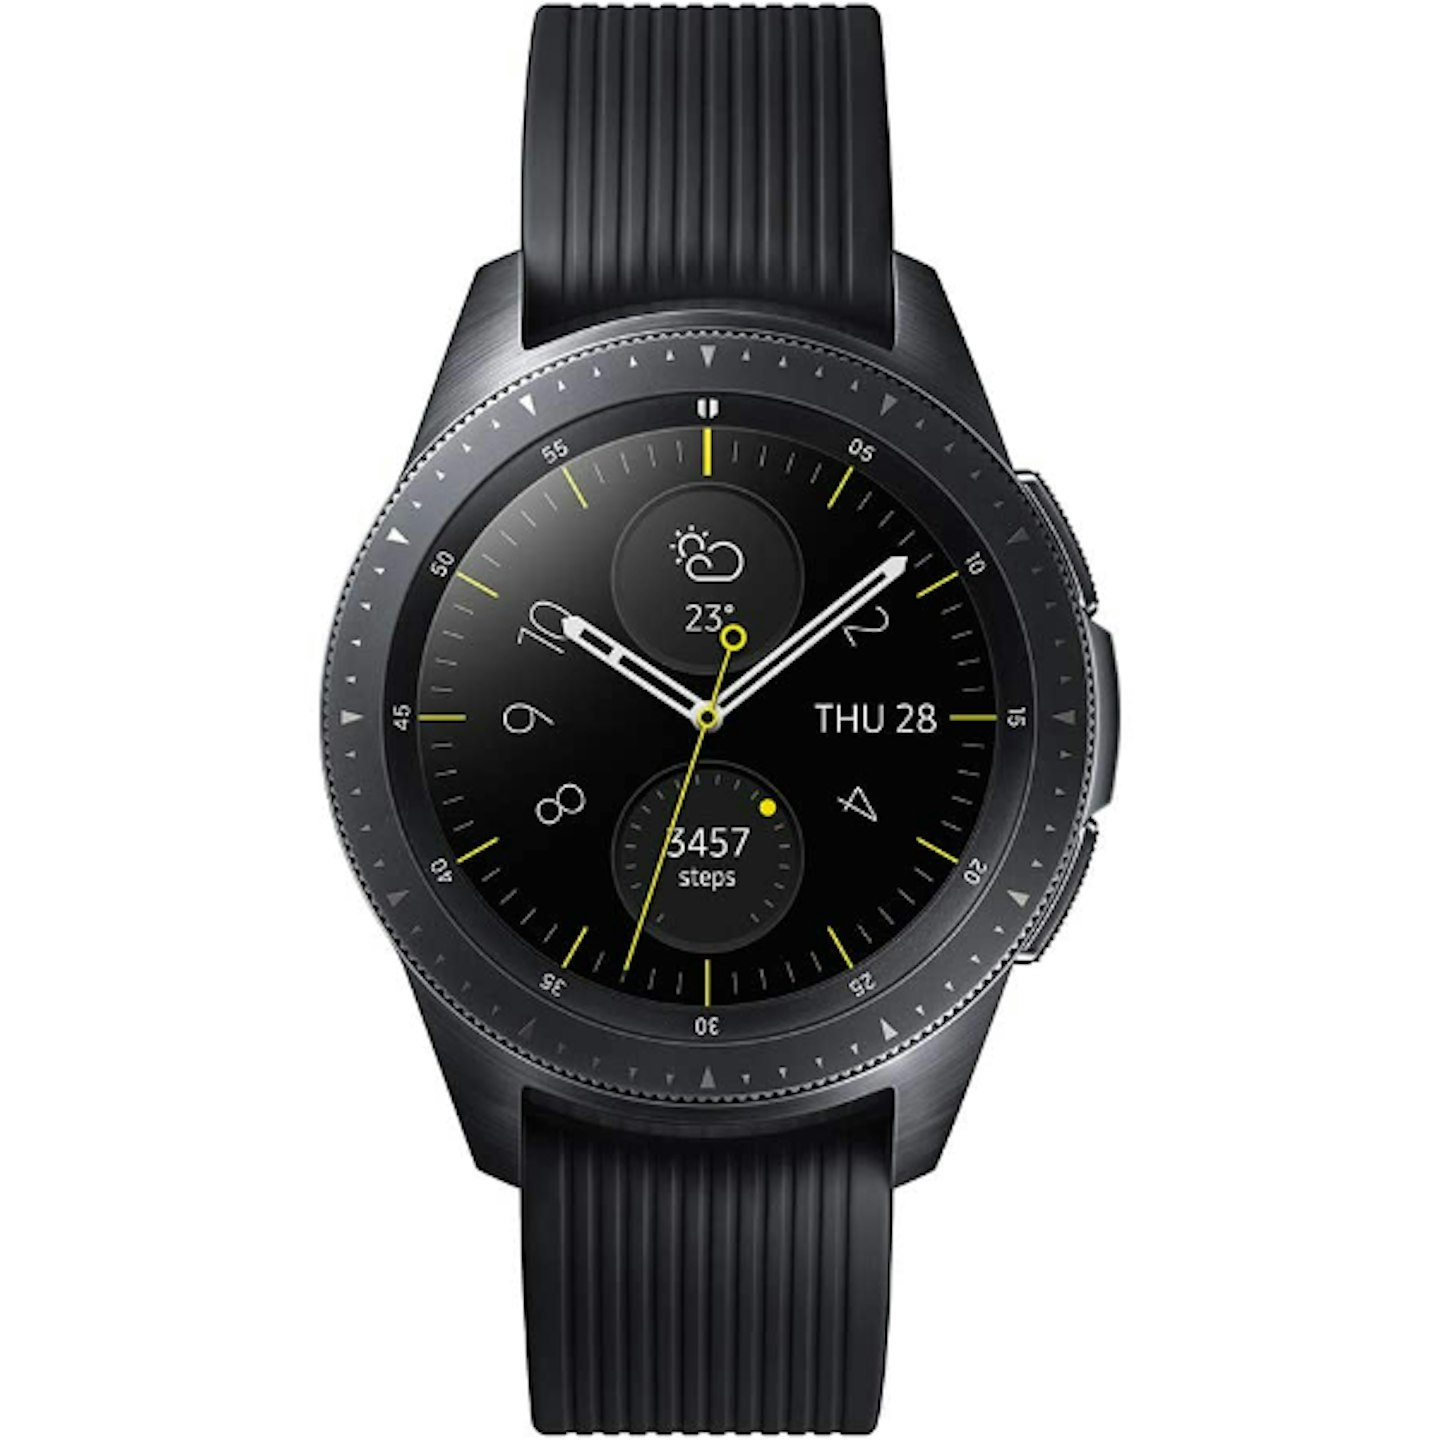 Samsung Galaxy Watch 4G